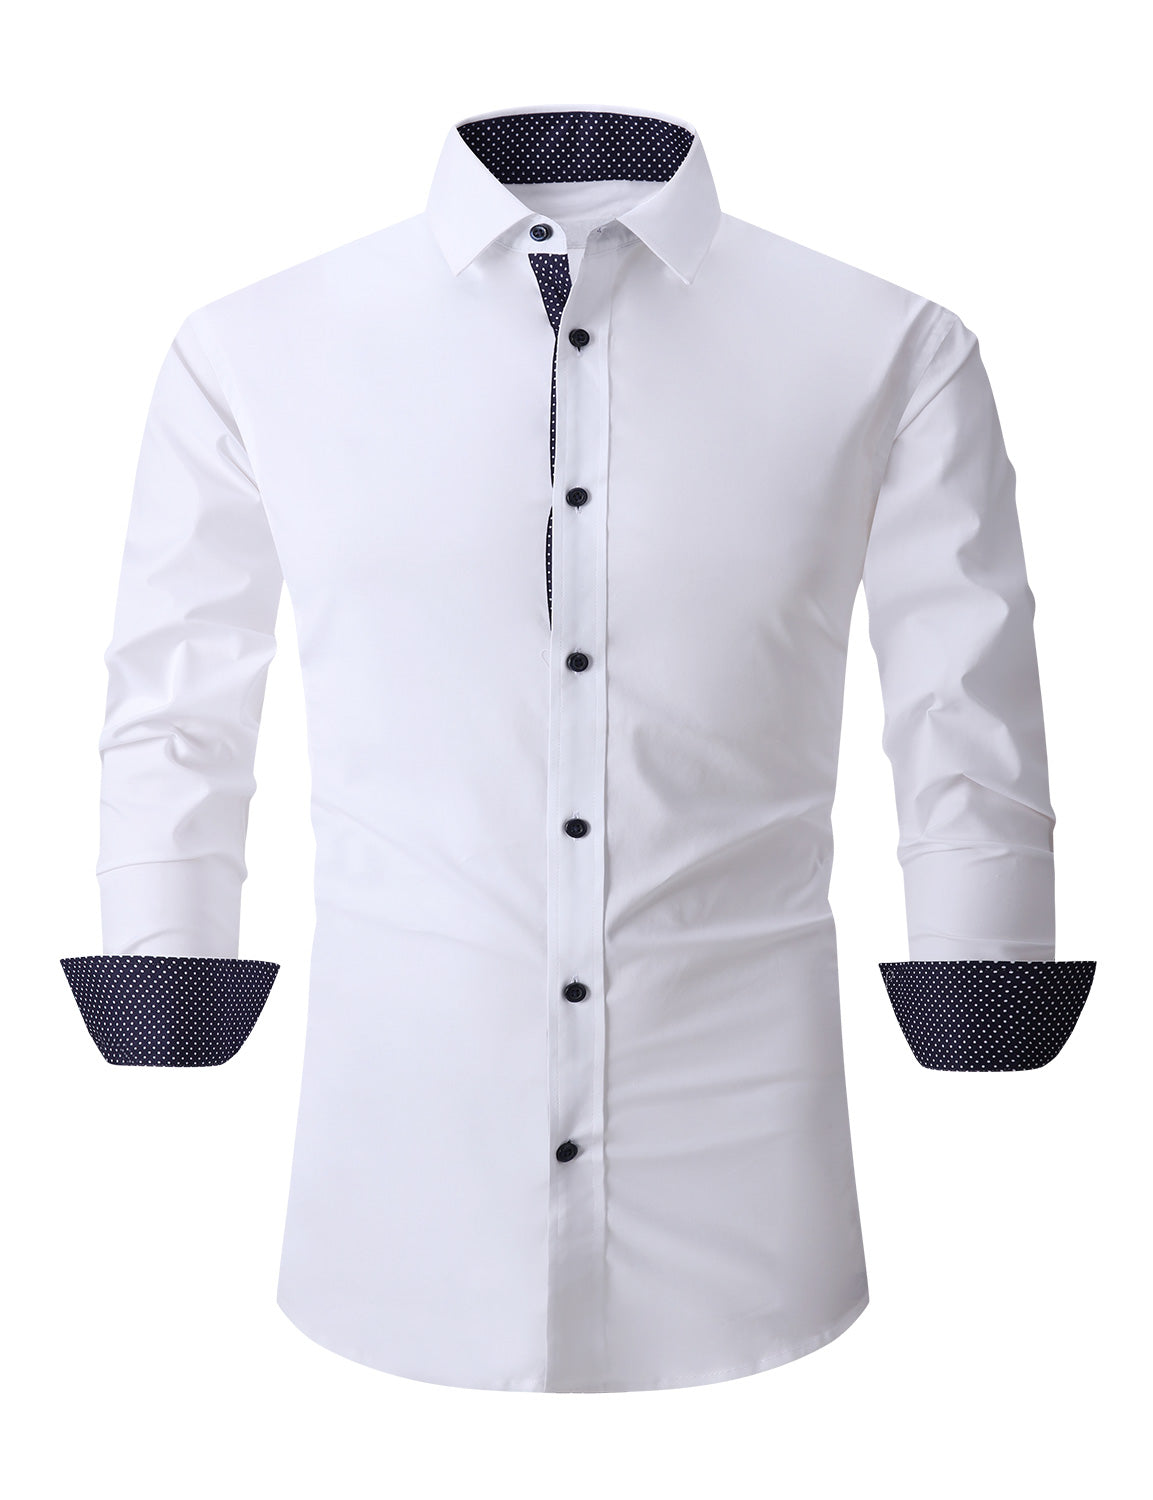 Men's Cotton Solid Color Casual Button Up Business Long Sleeve Dress Shirt